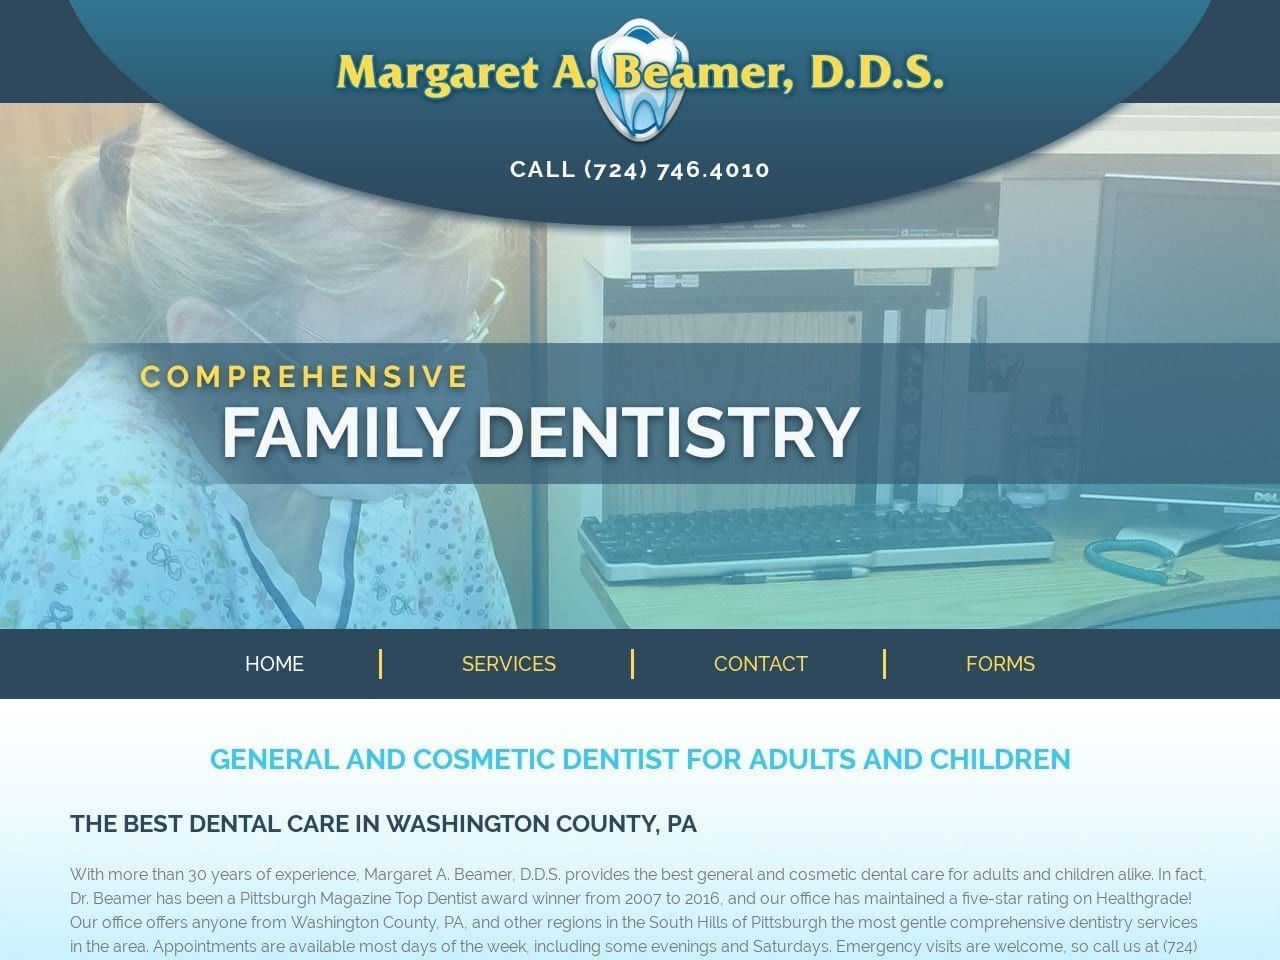 Beamer Margaret A DDS Website Screenshot from margaretabeamerdds.com